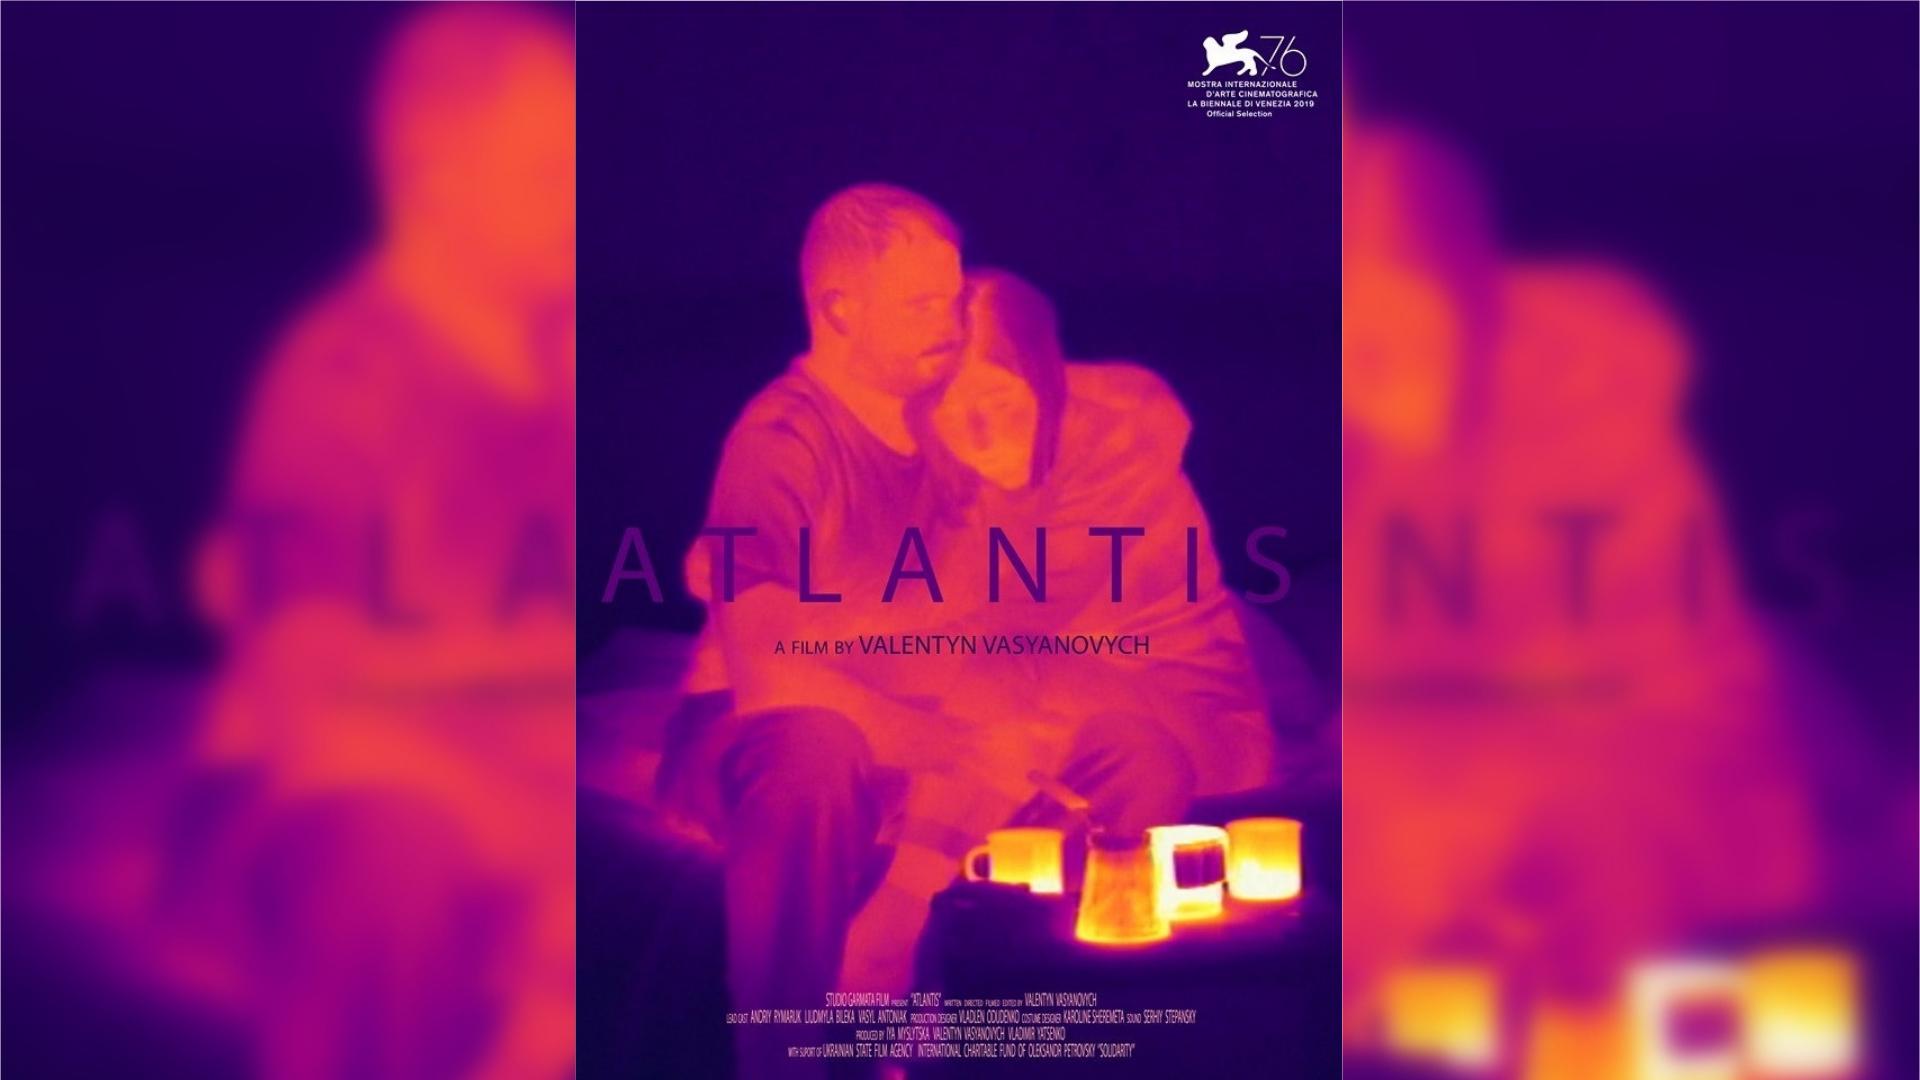 "Atlantis" goes for European Oscar